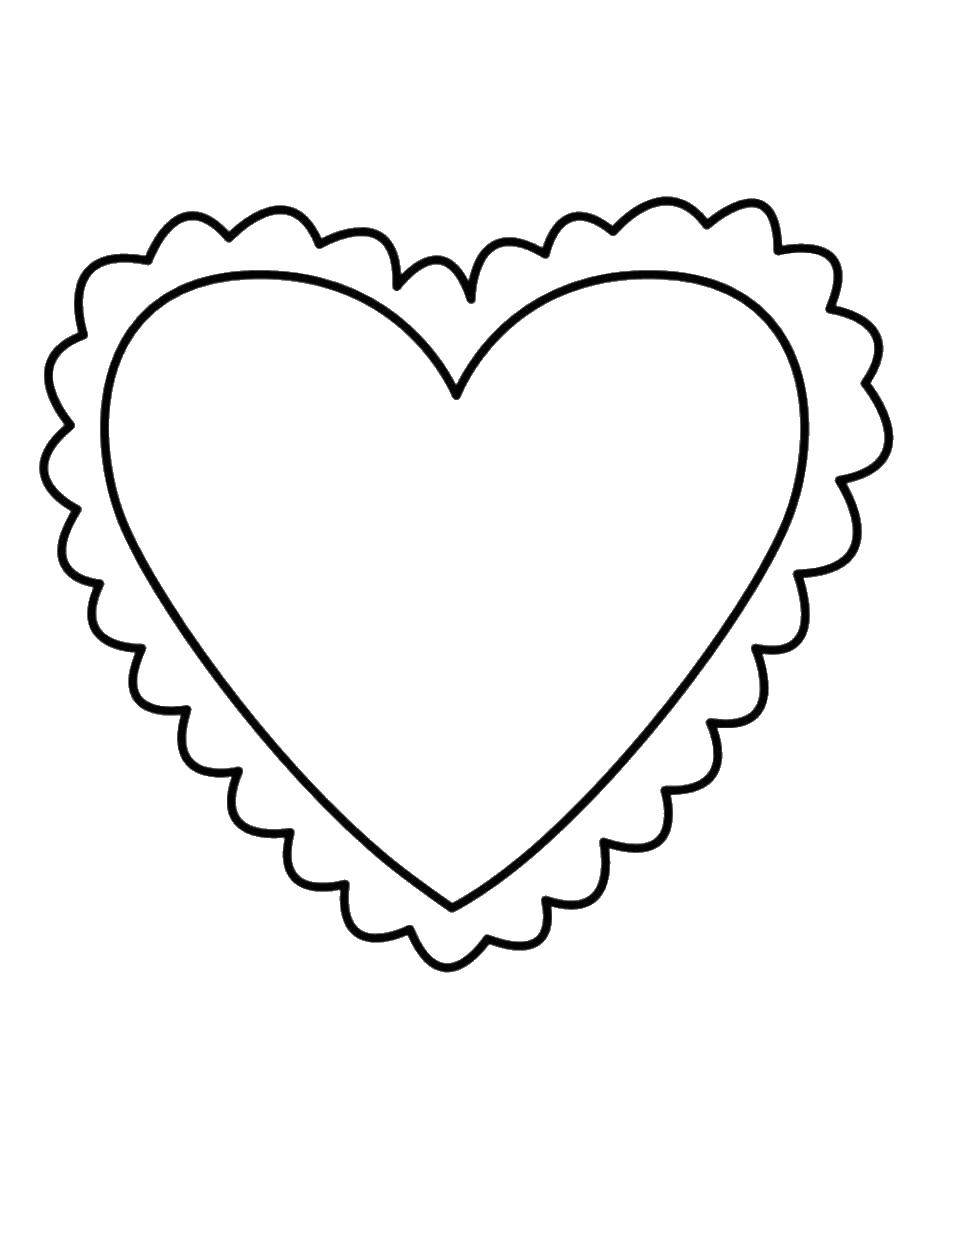 Название: Раскраска Сердце в кружевах. Категория: Сердечки. Теги: Сердечко, любовь.